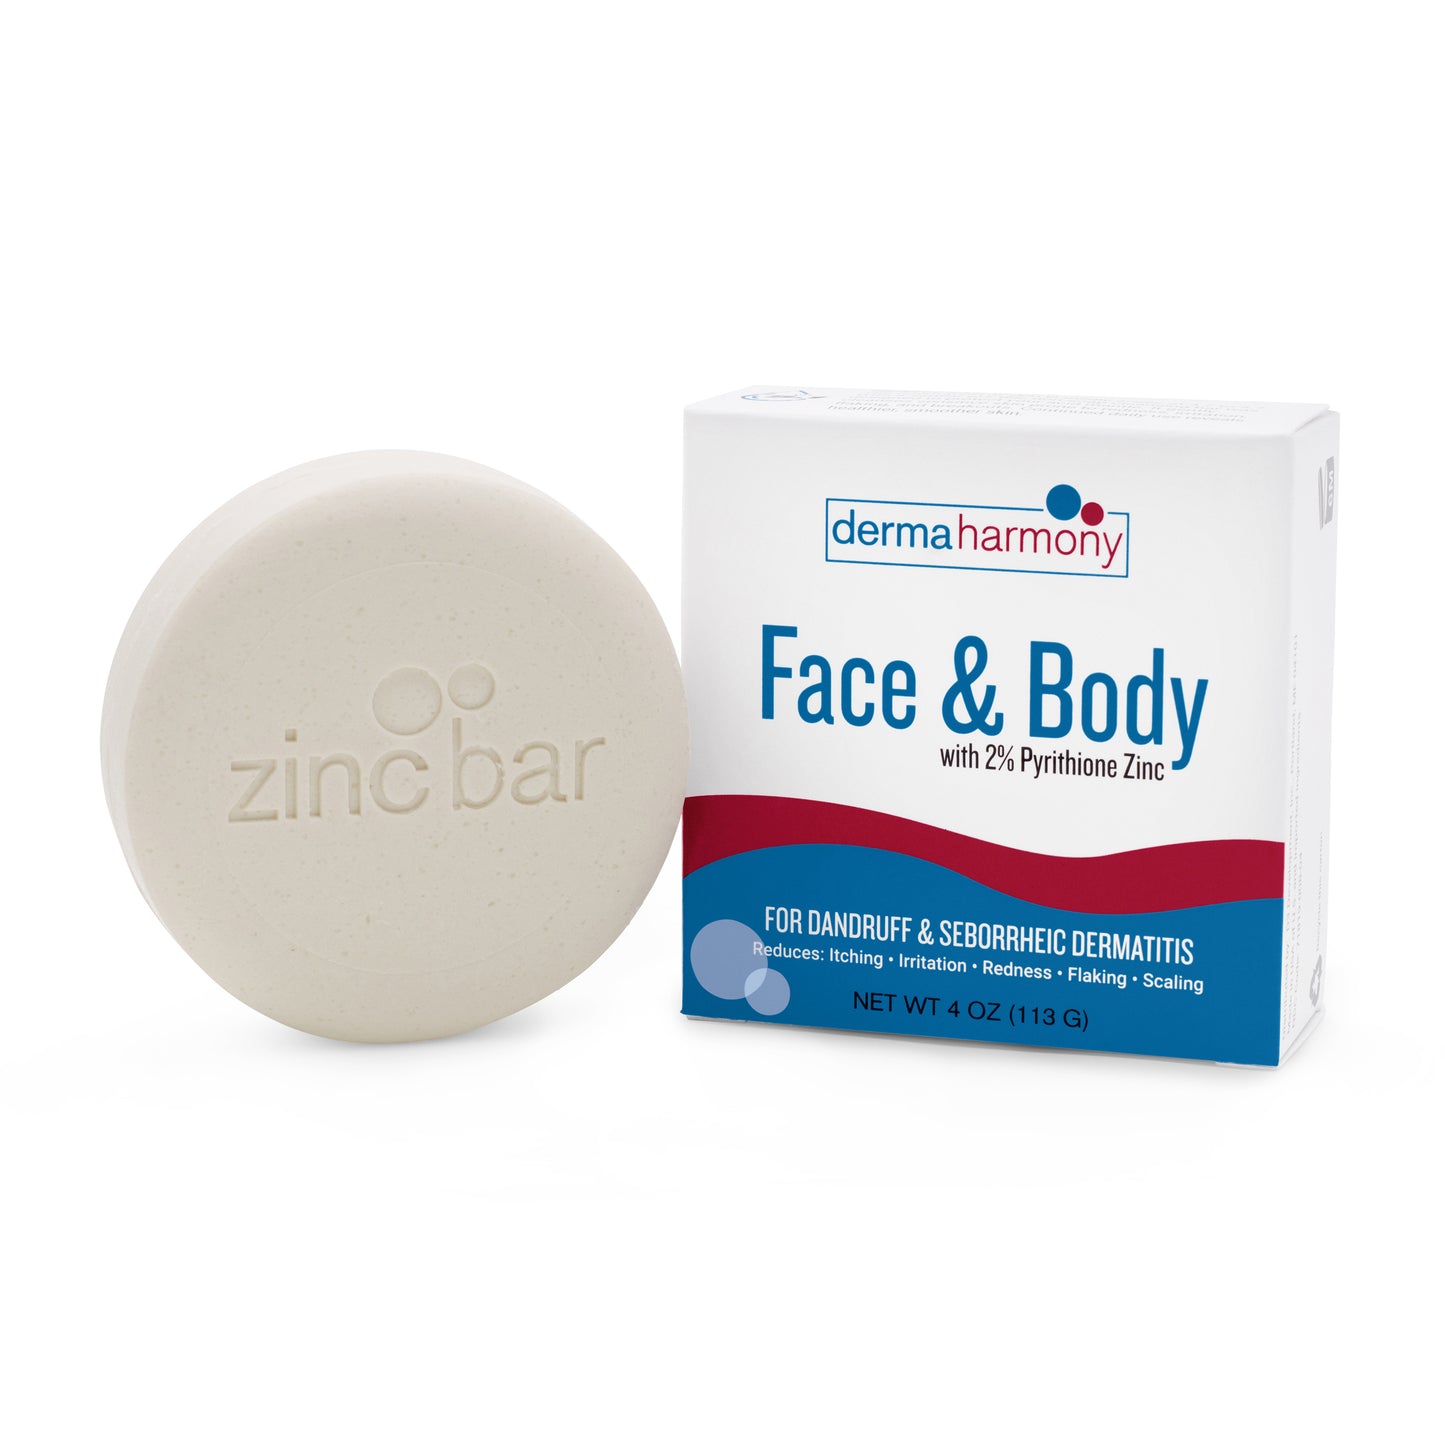 2% Pyrithione Zinc Face & Body Bar (non-soap) - Unscented